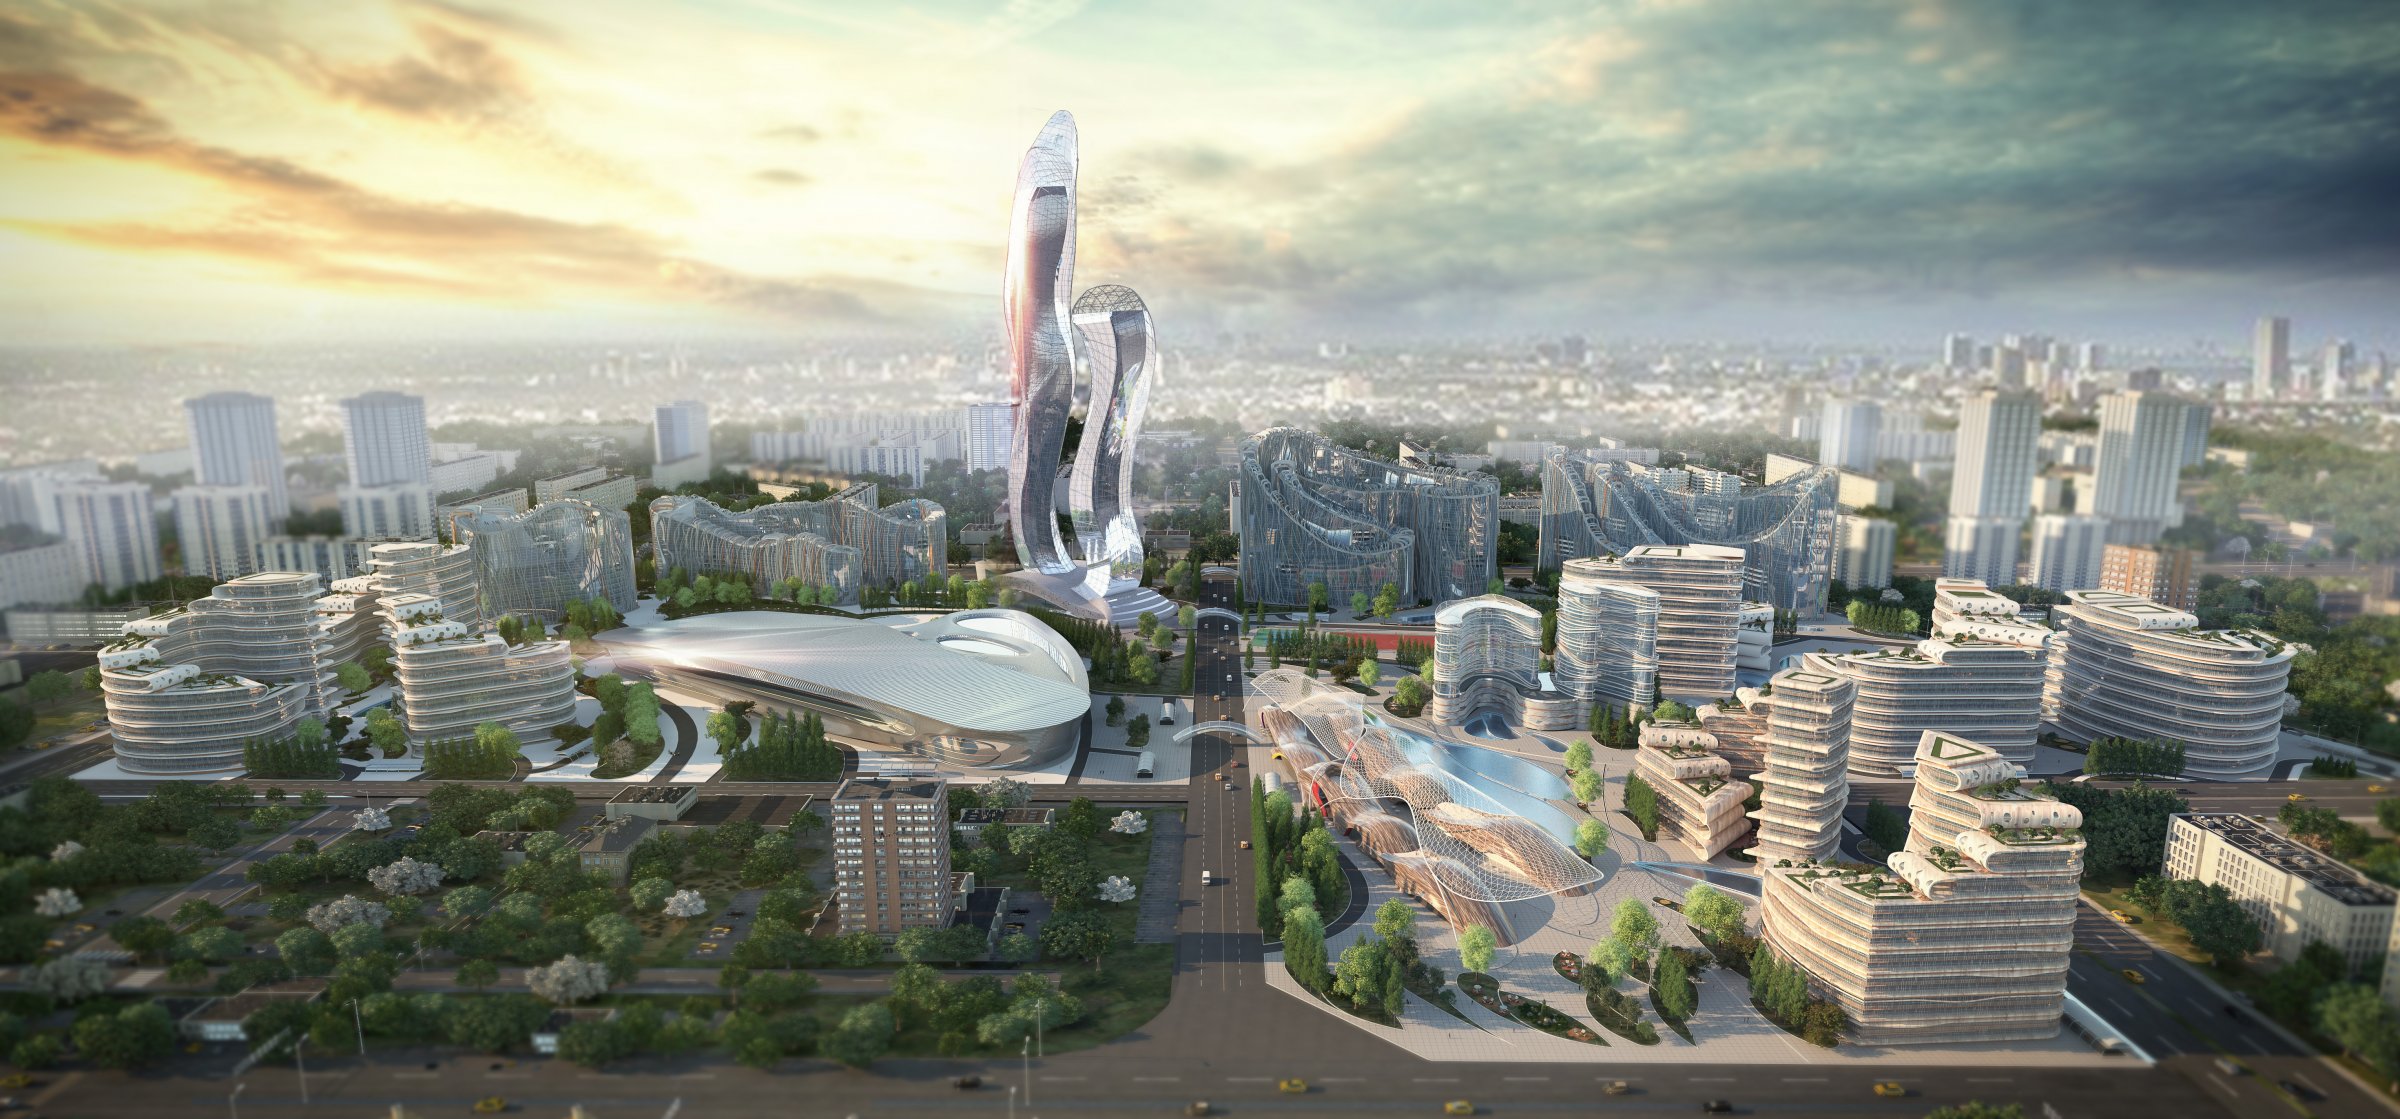 Senegal is building a $2 billion futuristic city to help cut down on overcrowding in Dakar